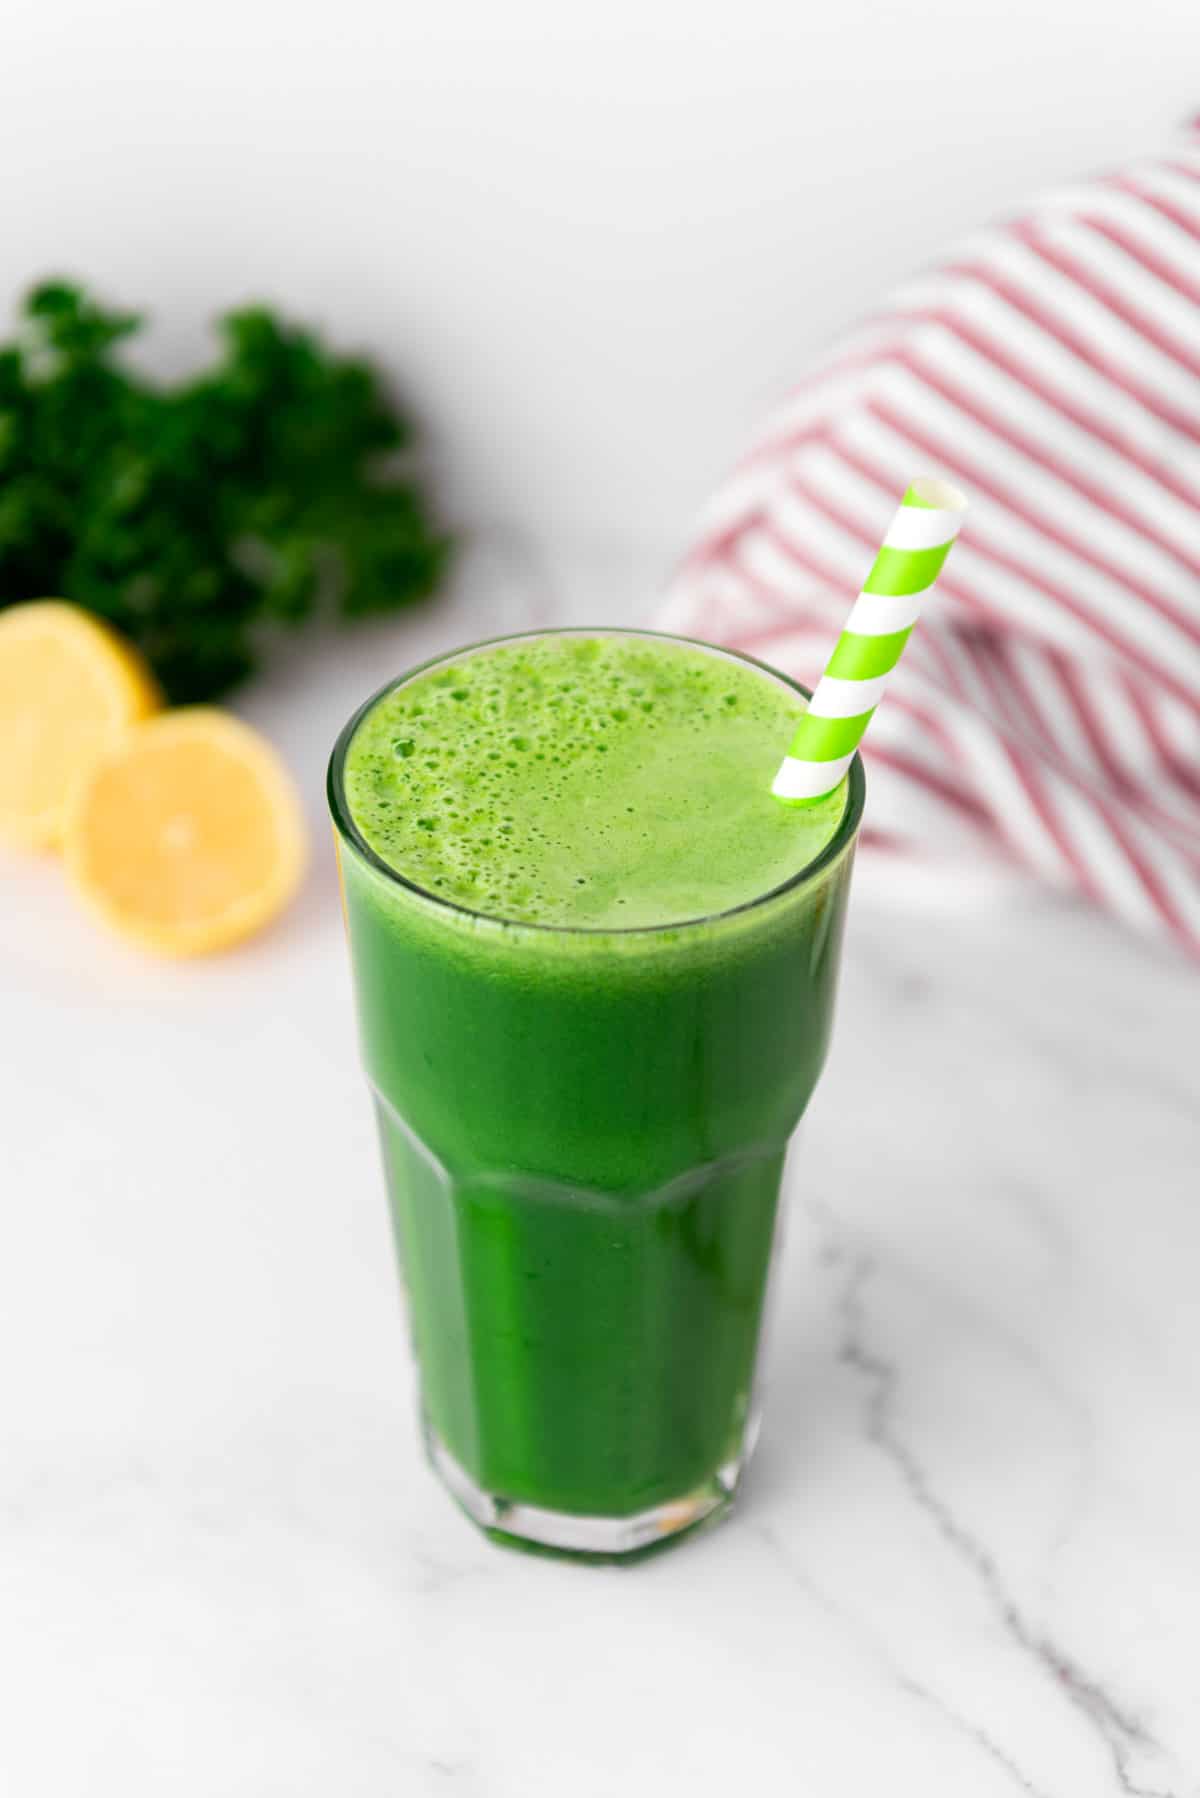 pure green juice with kale, celery, apples, lemon